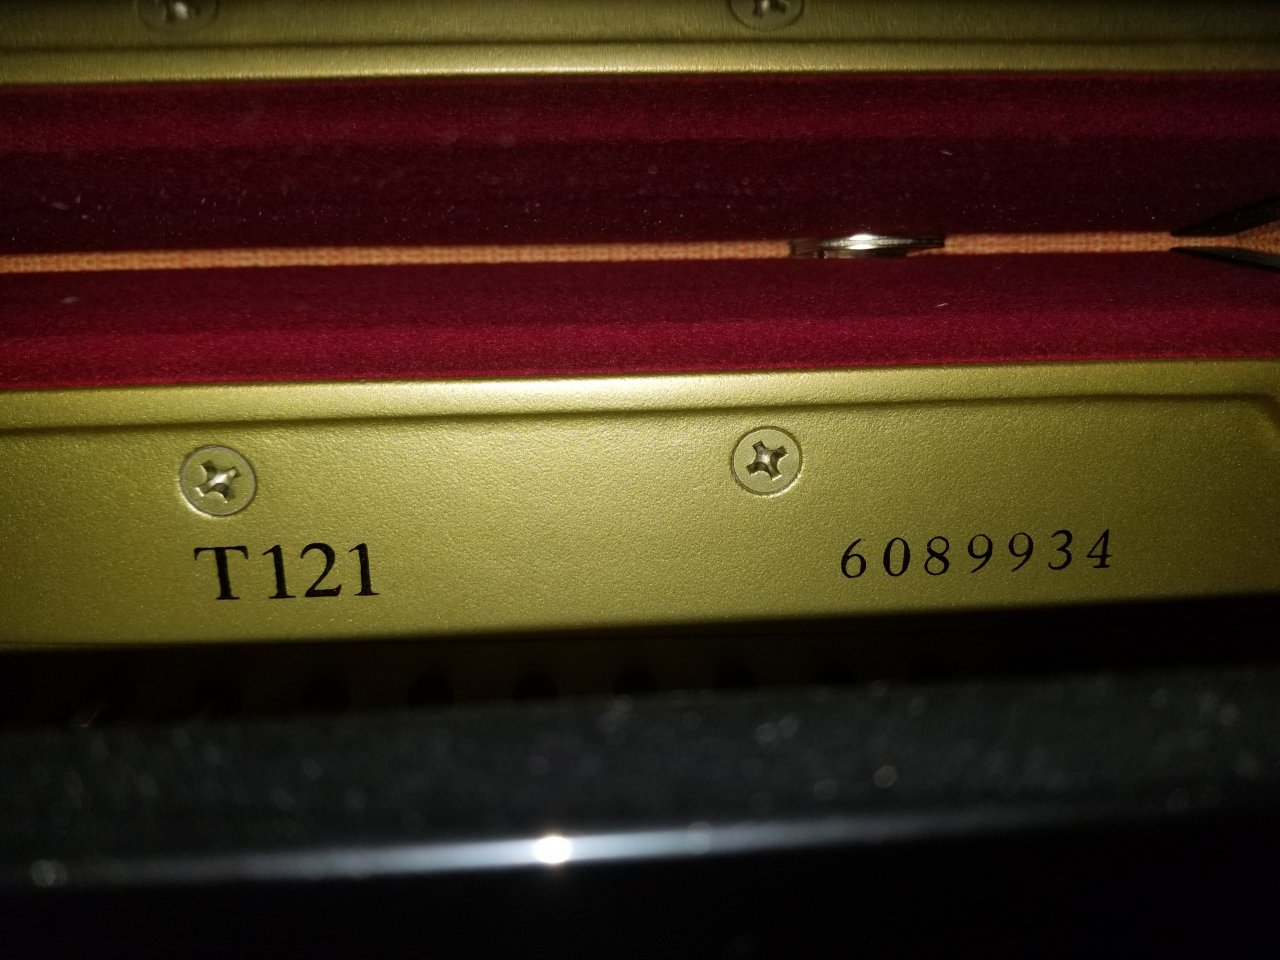 Yamaha serial number.